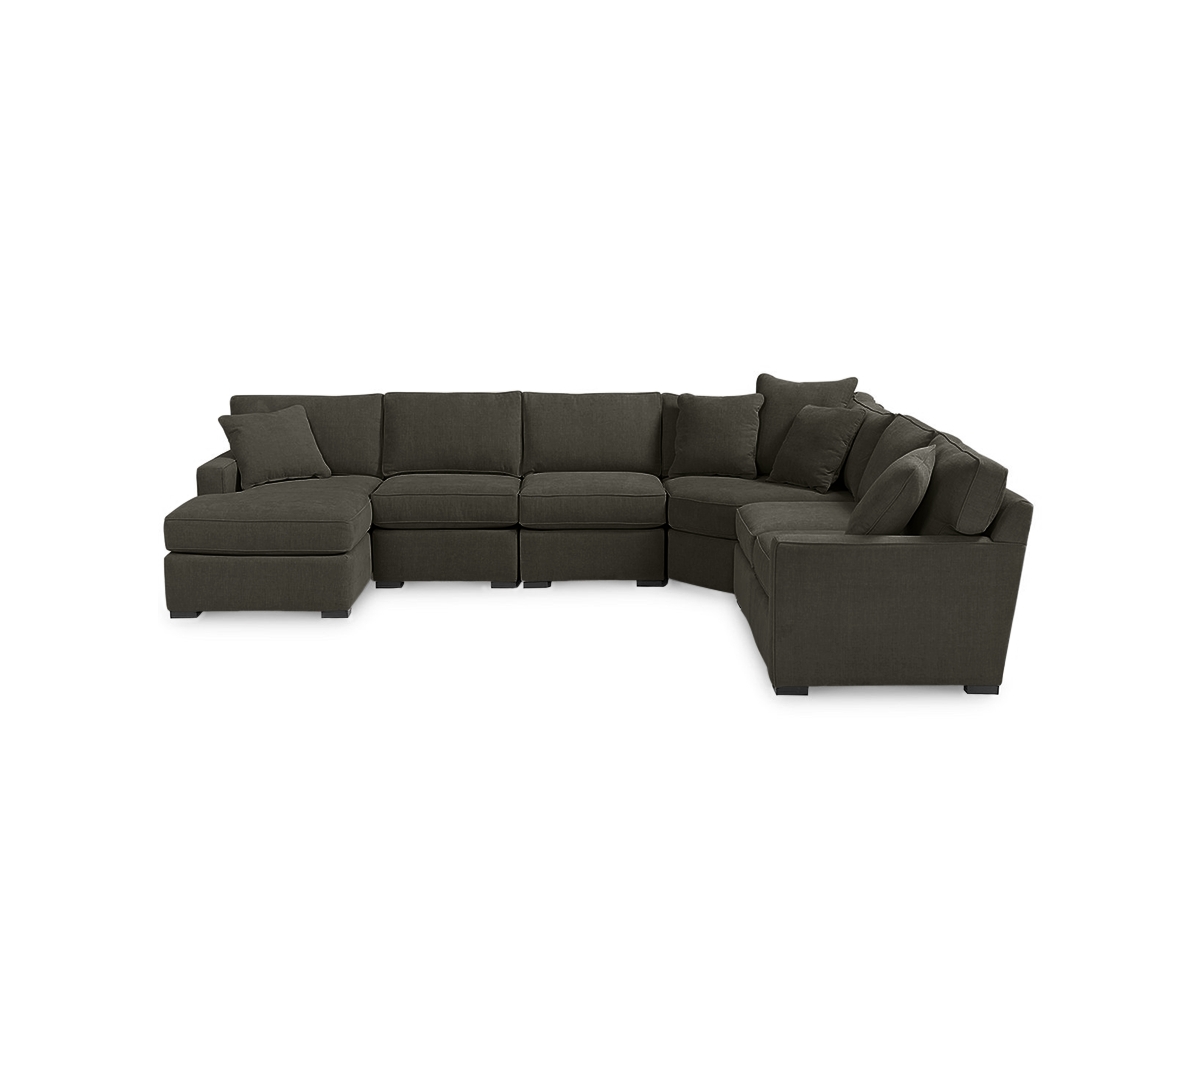 Radley Fabric 6-Piece Chaise Sectional Sofa, Created for Macys